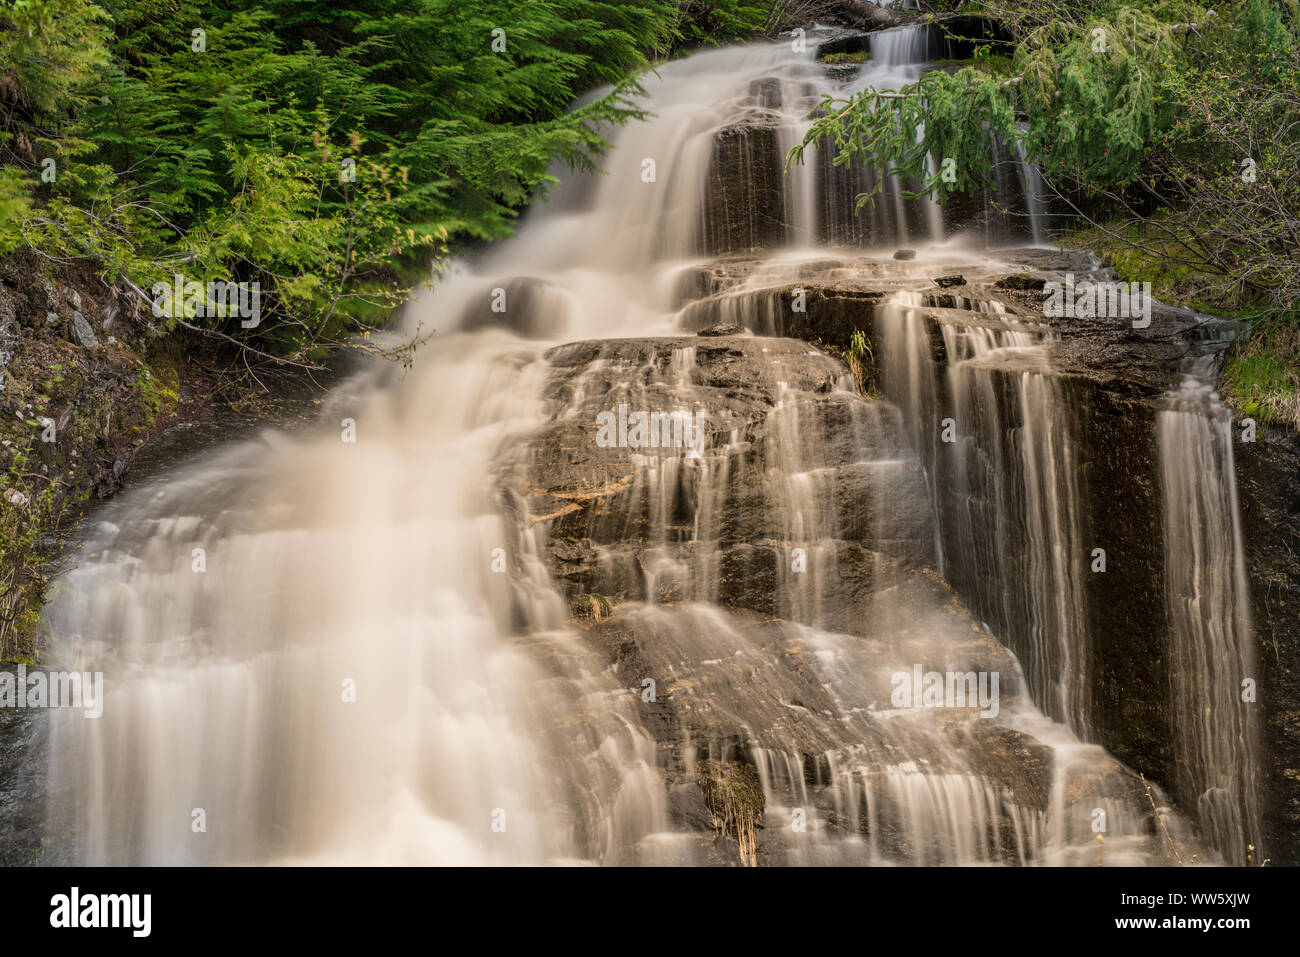 Cascade, waterfall Stock Photo